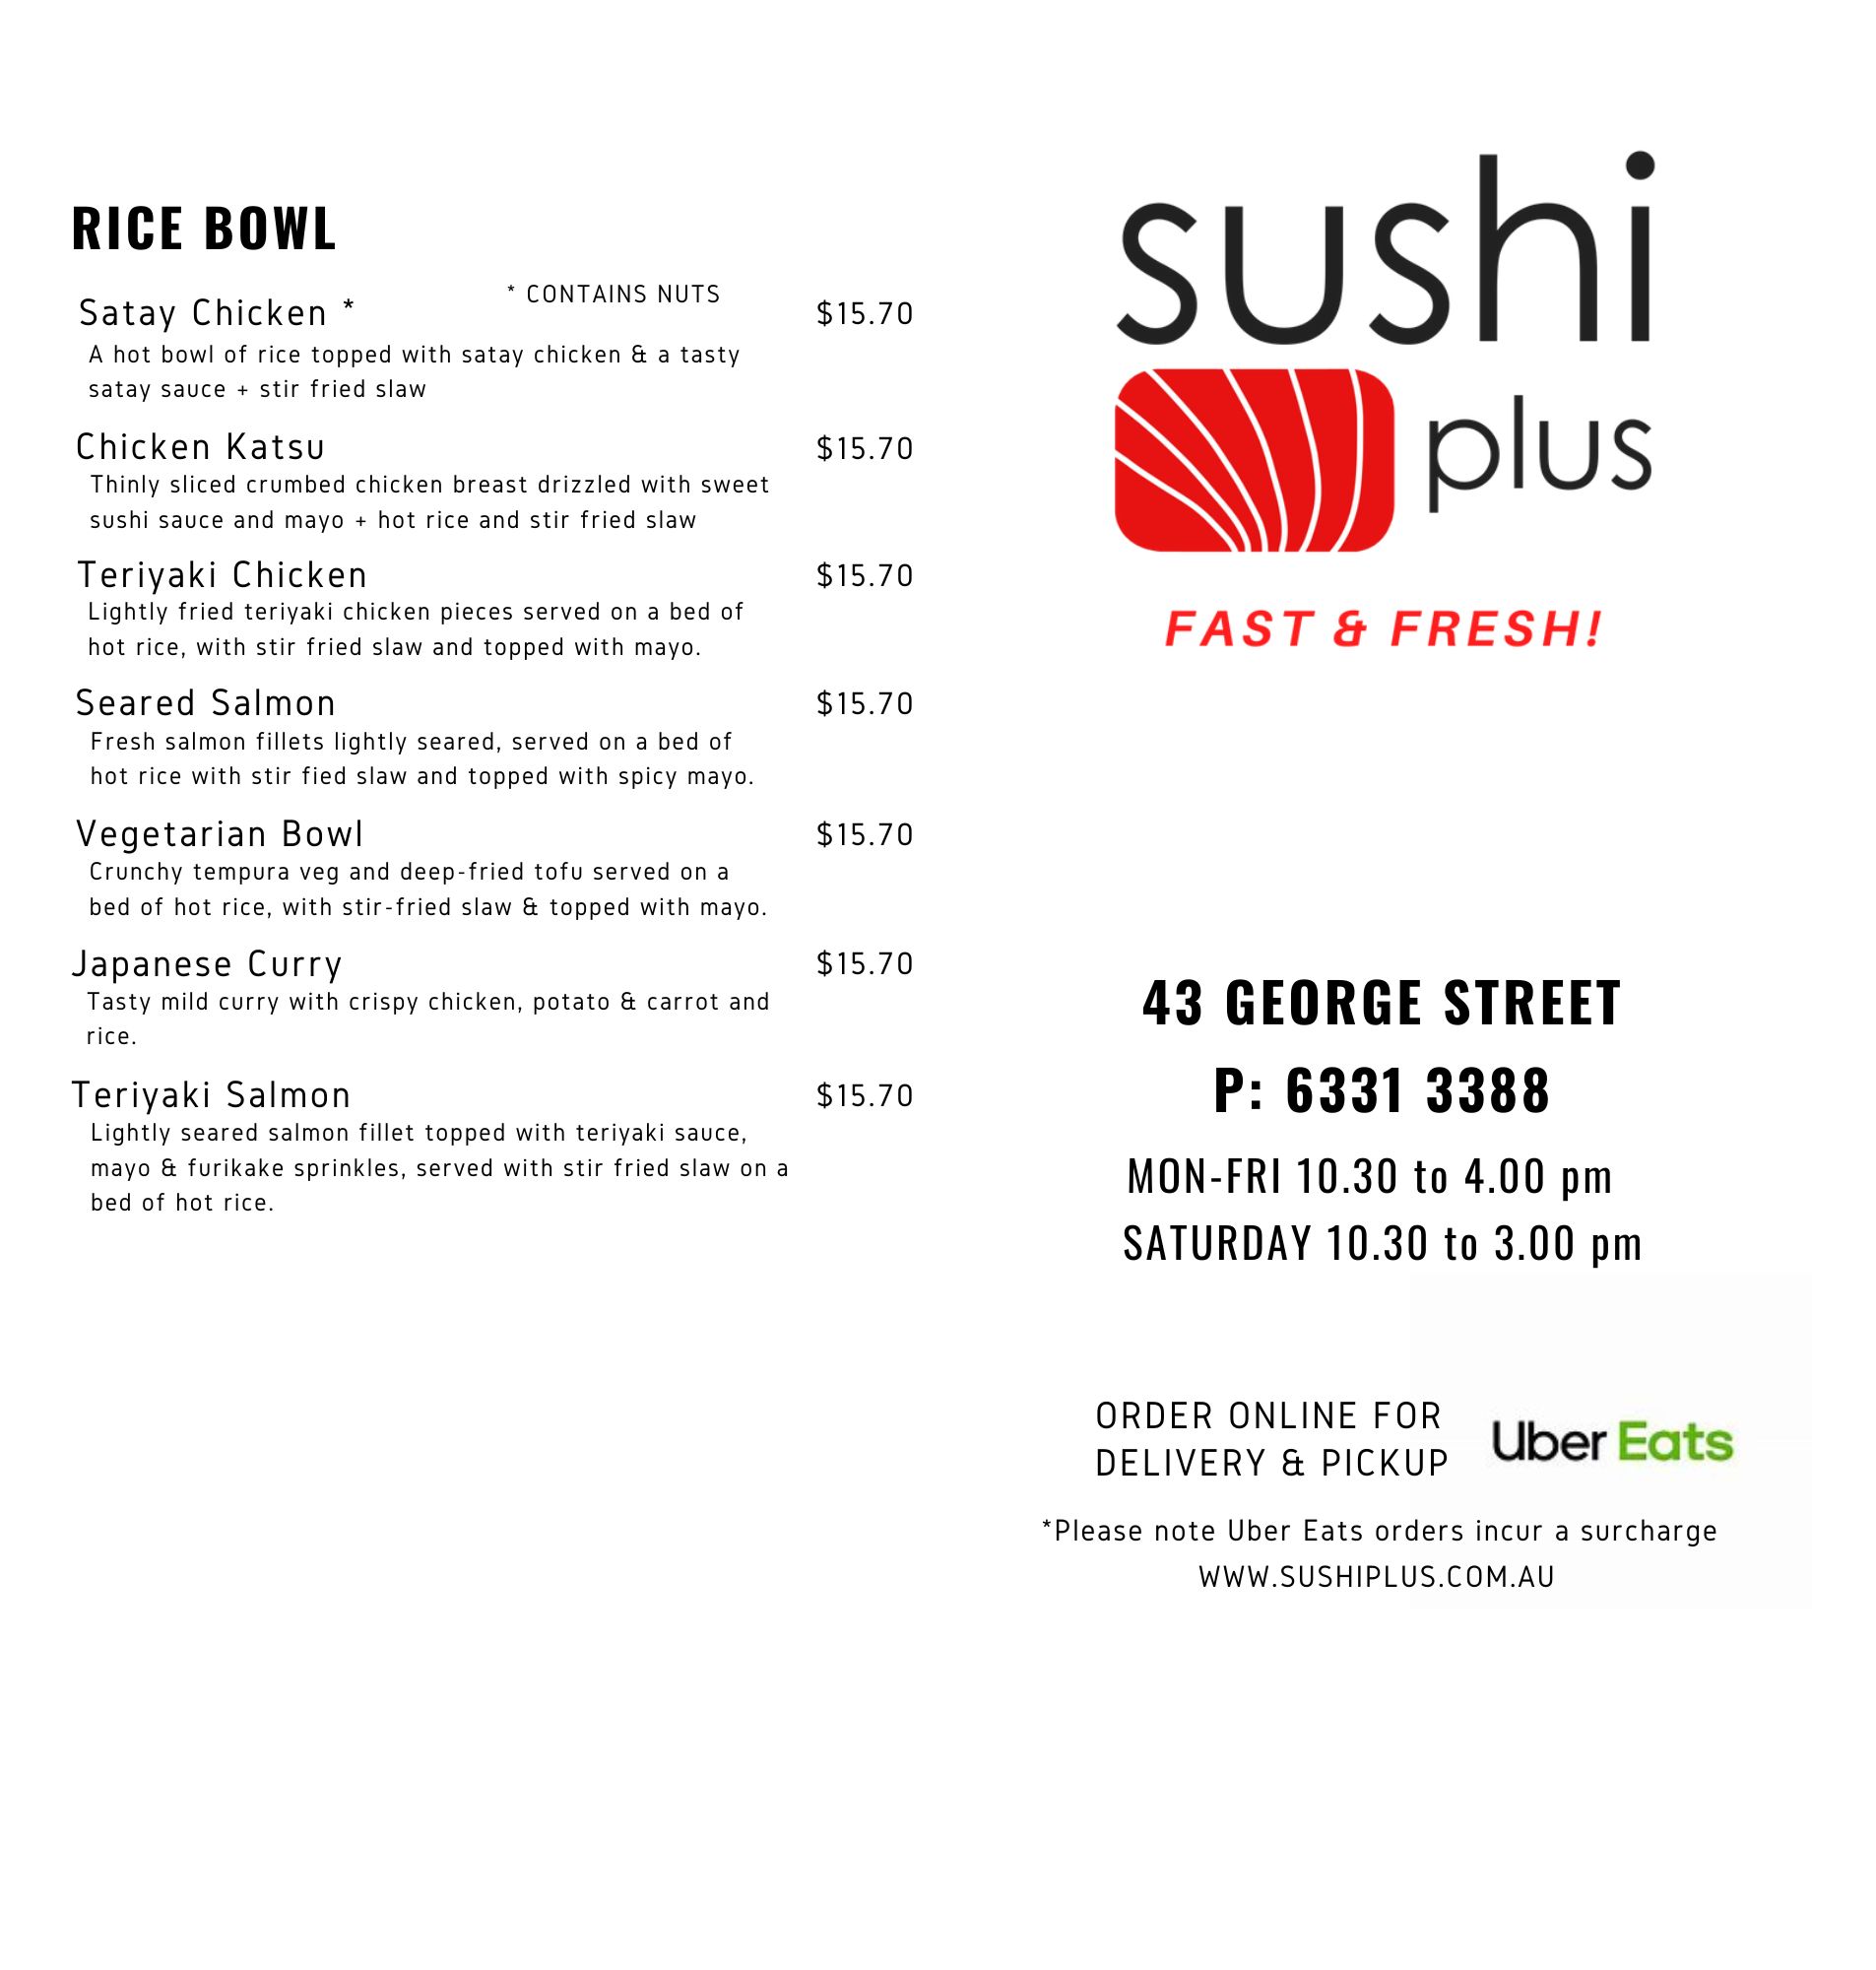 Sushi Plus on George